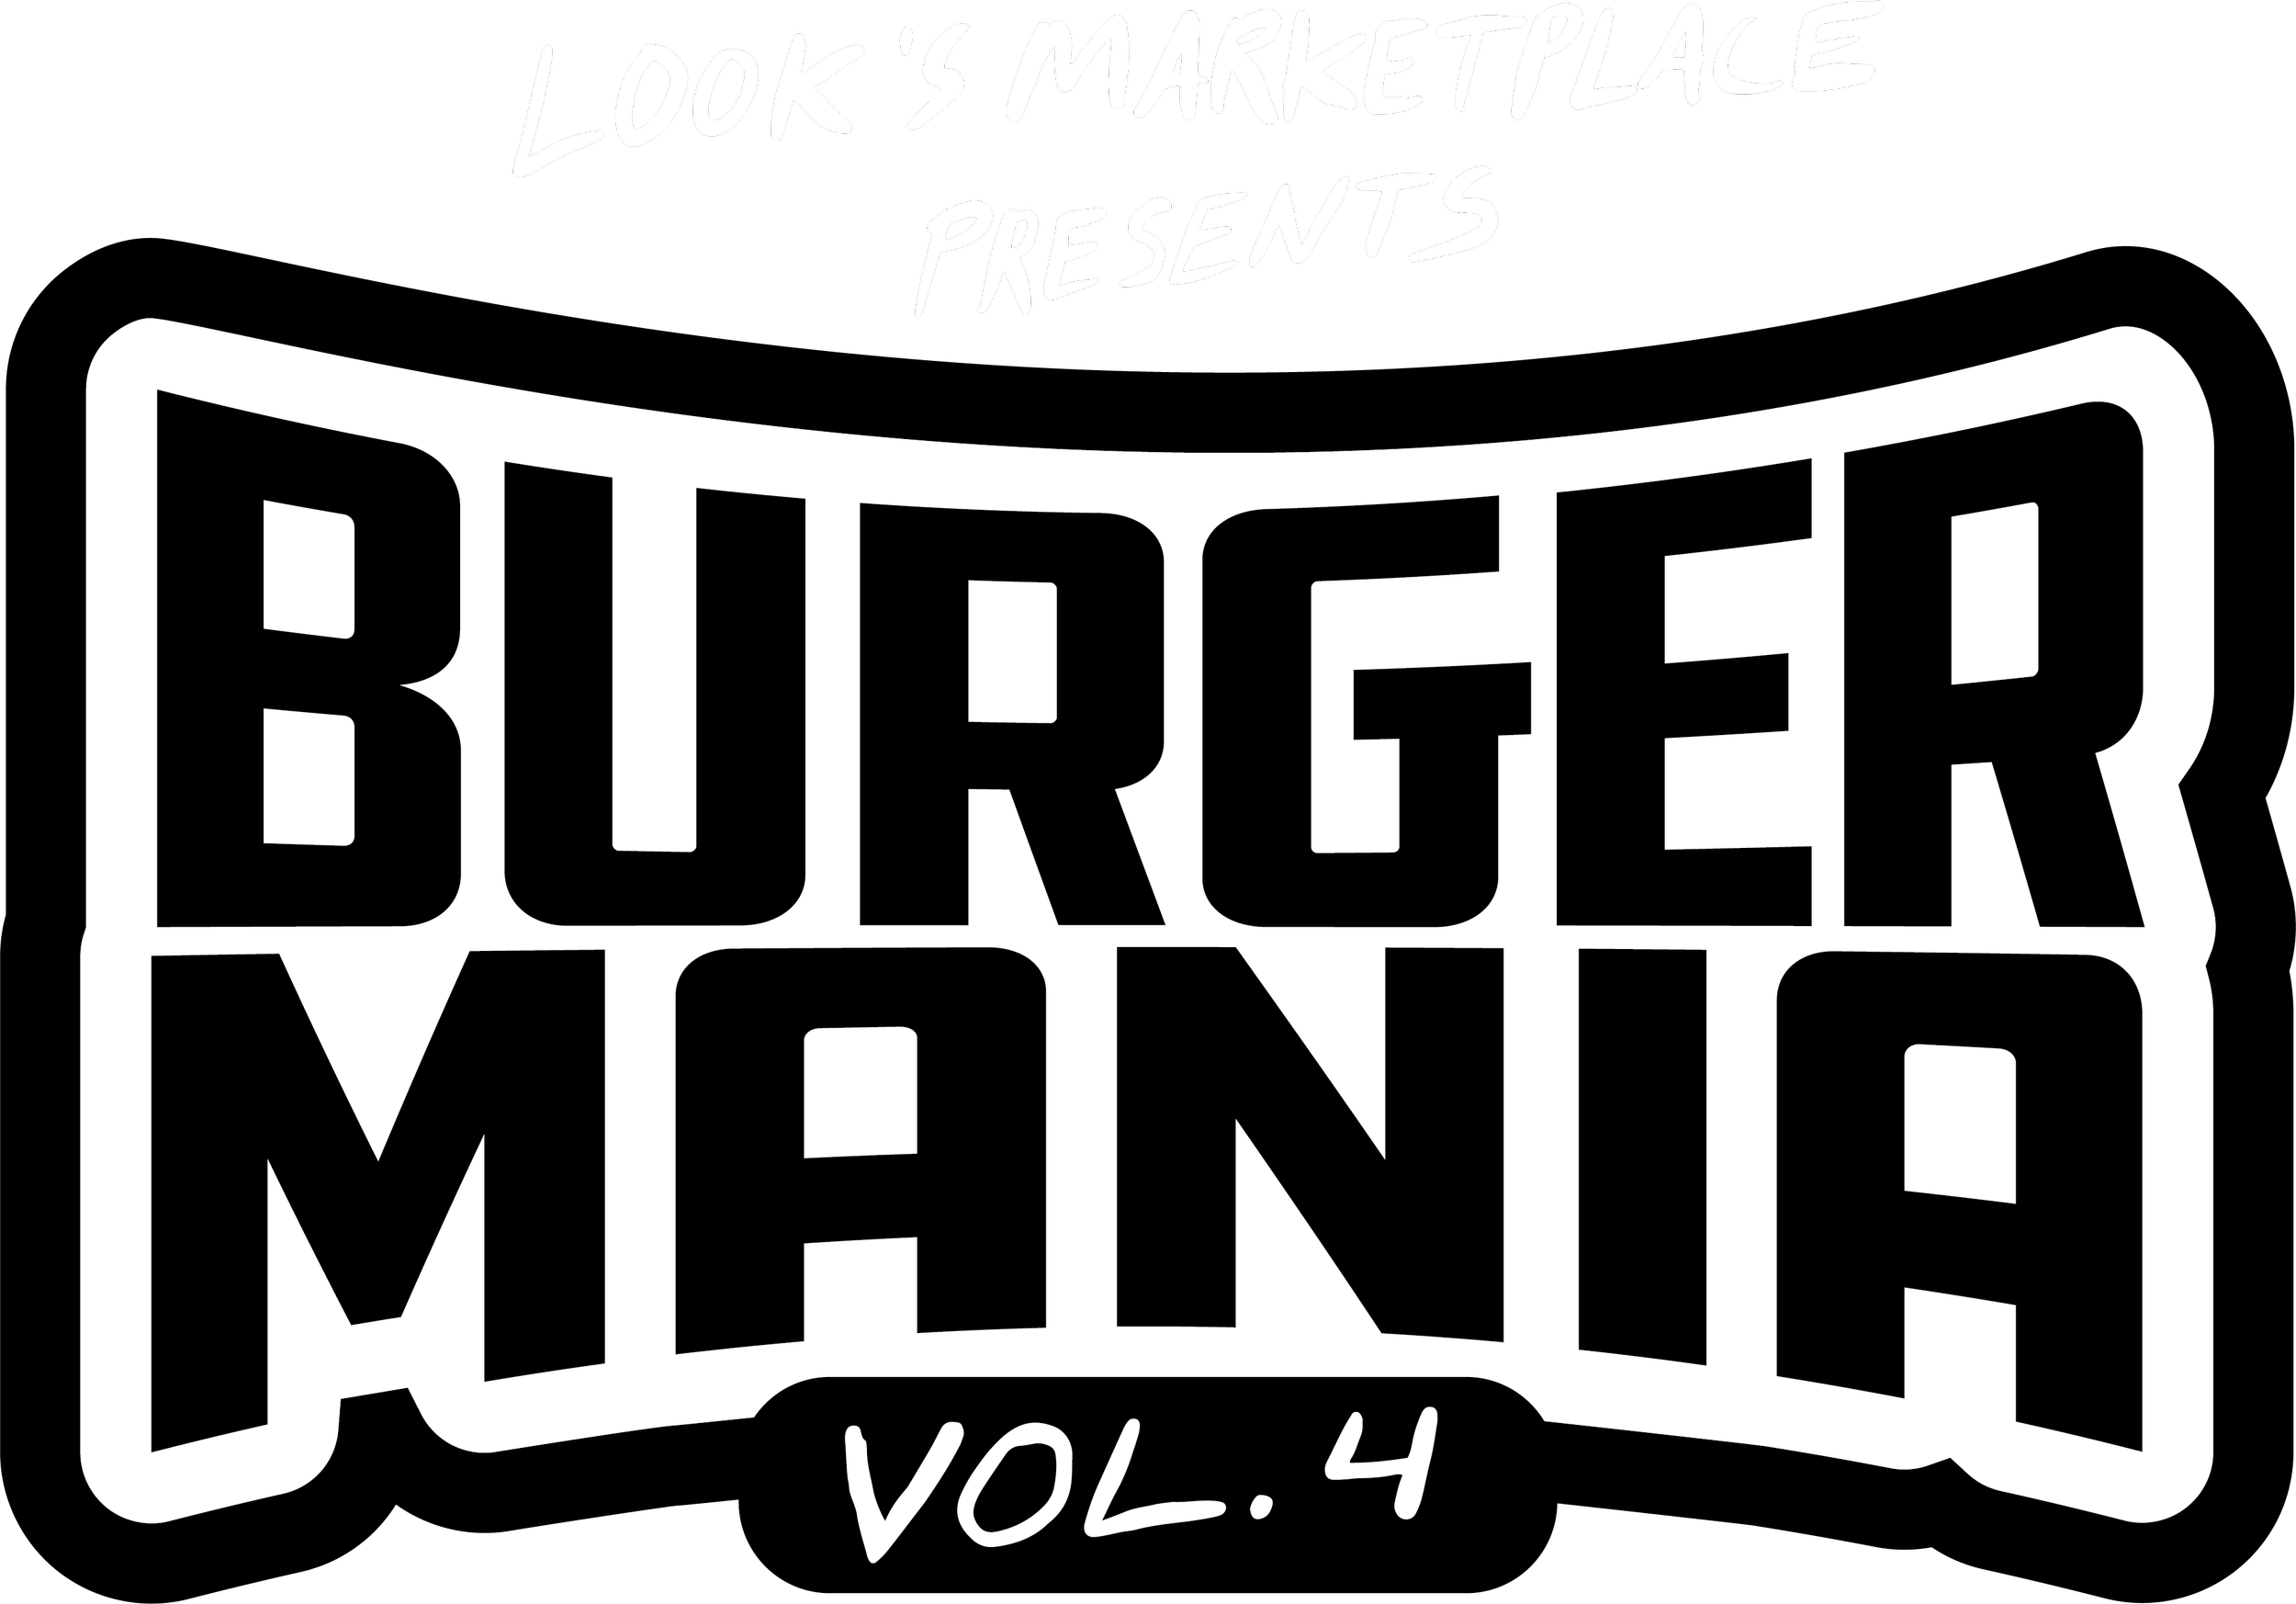 Burger Mania  Look's Marketplace